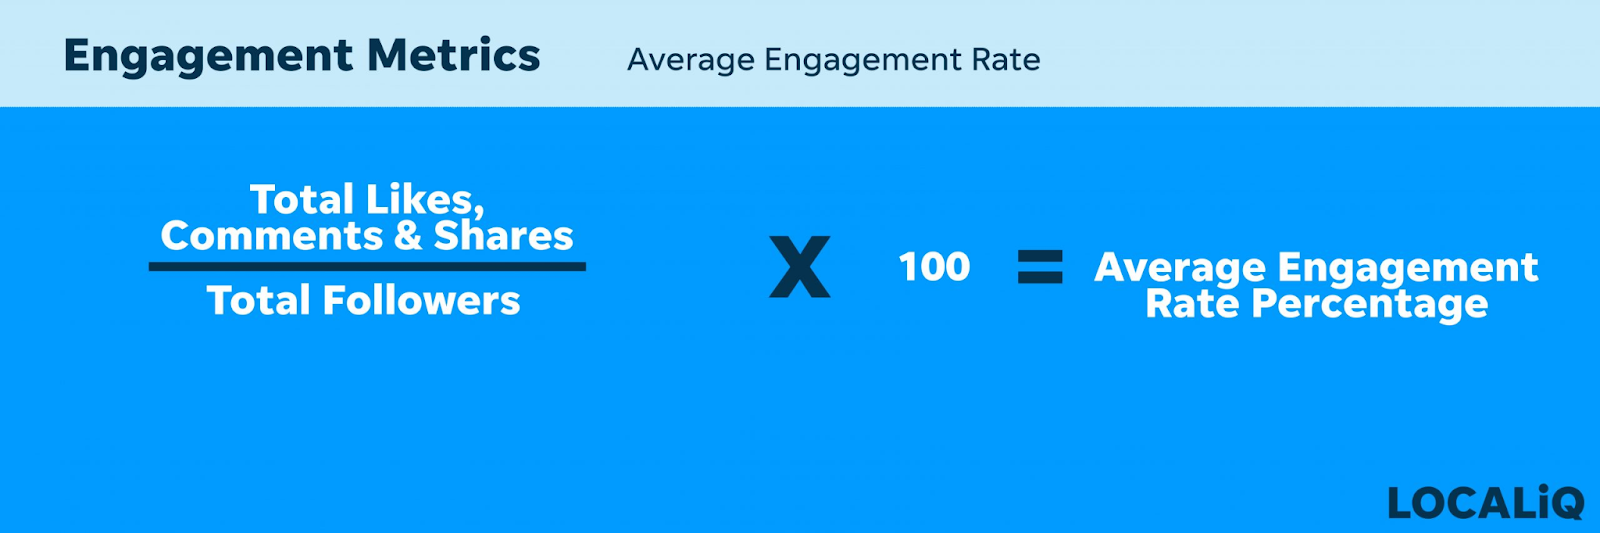 social media metrics - Engagement metrics